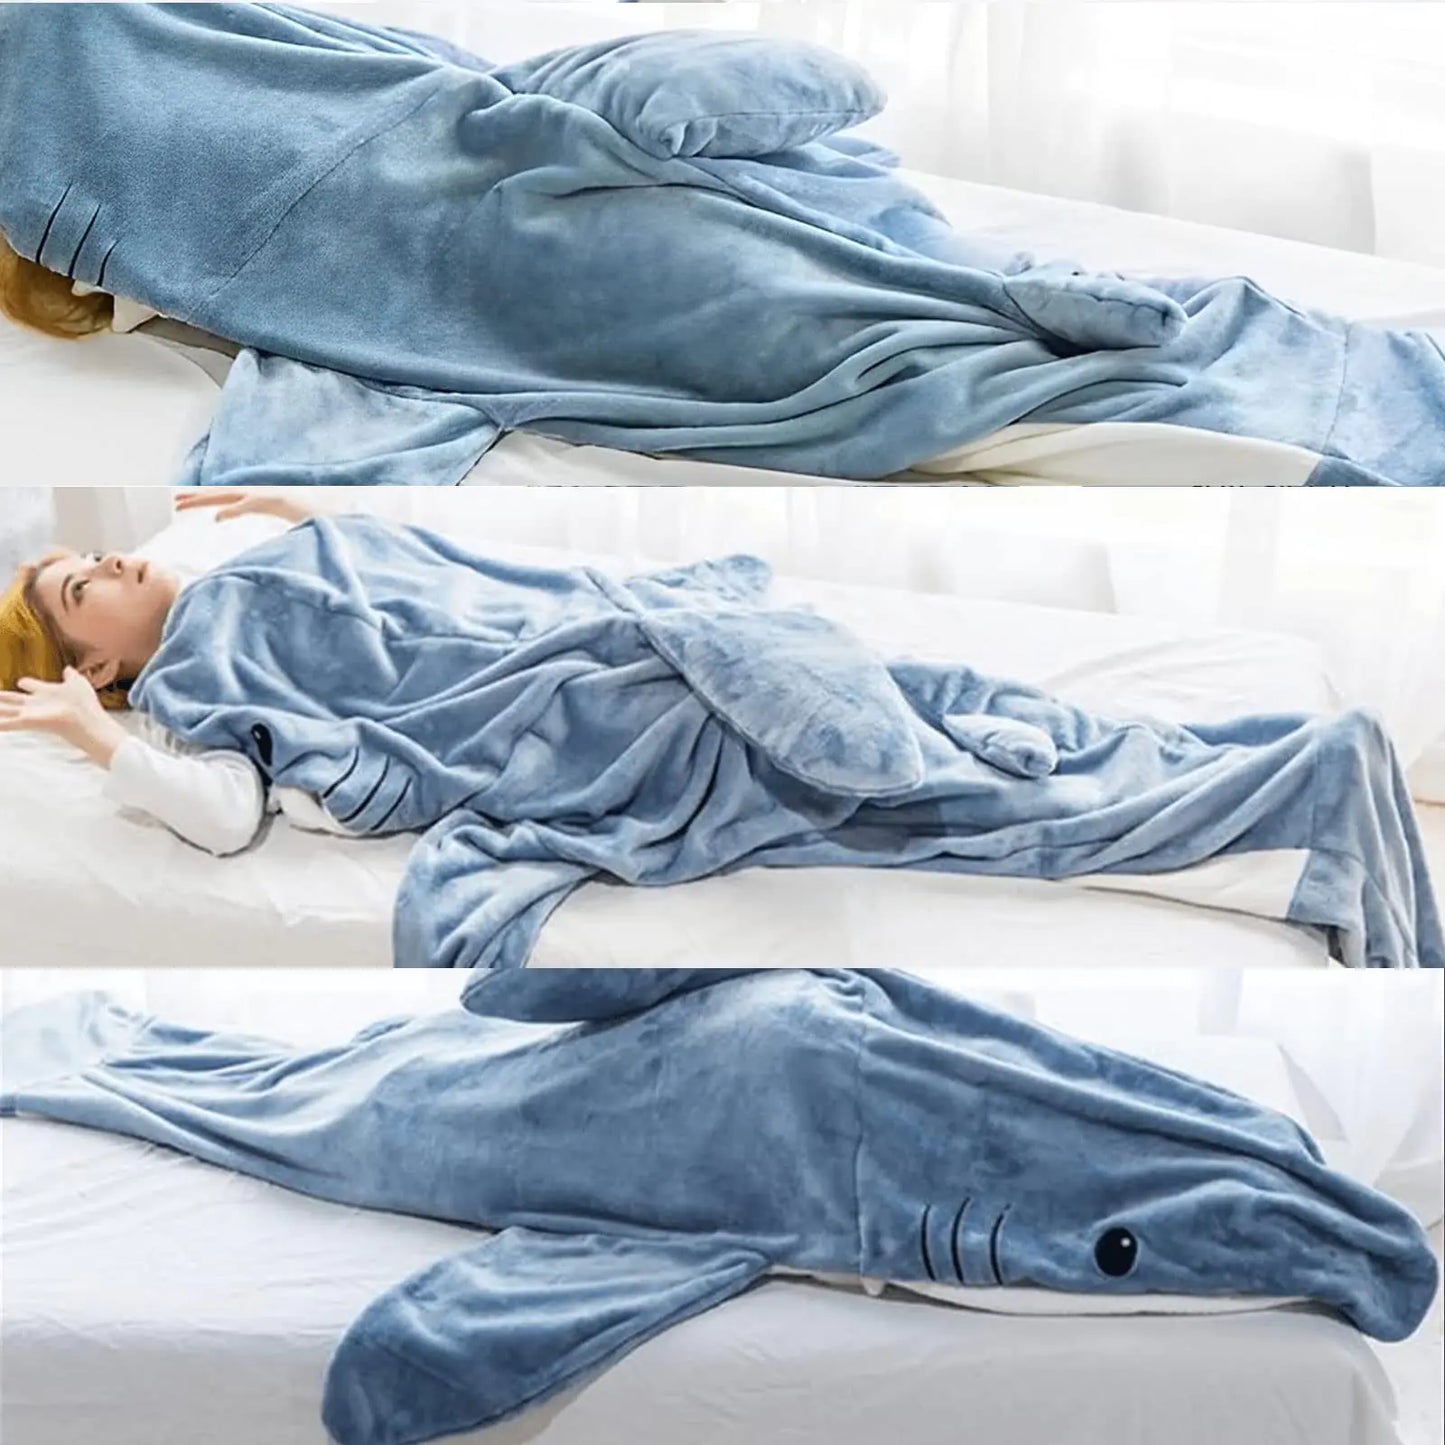 AmoorFemme Shark Blankety